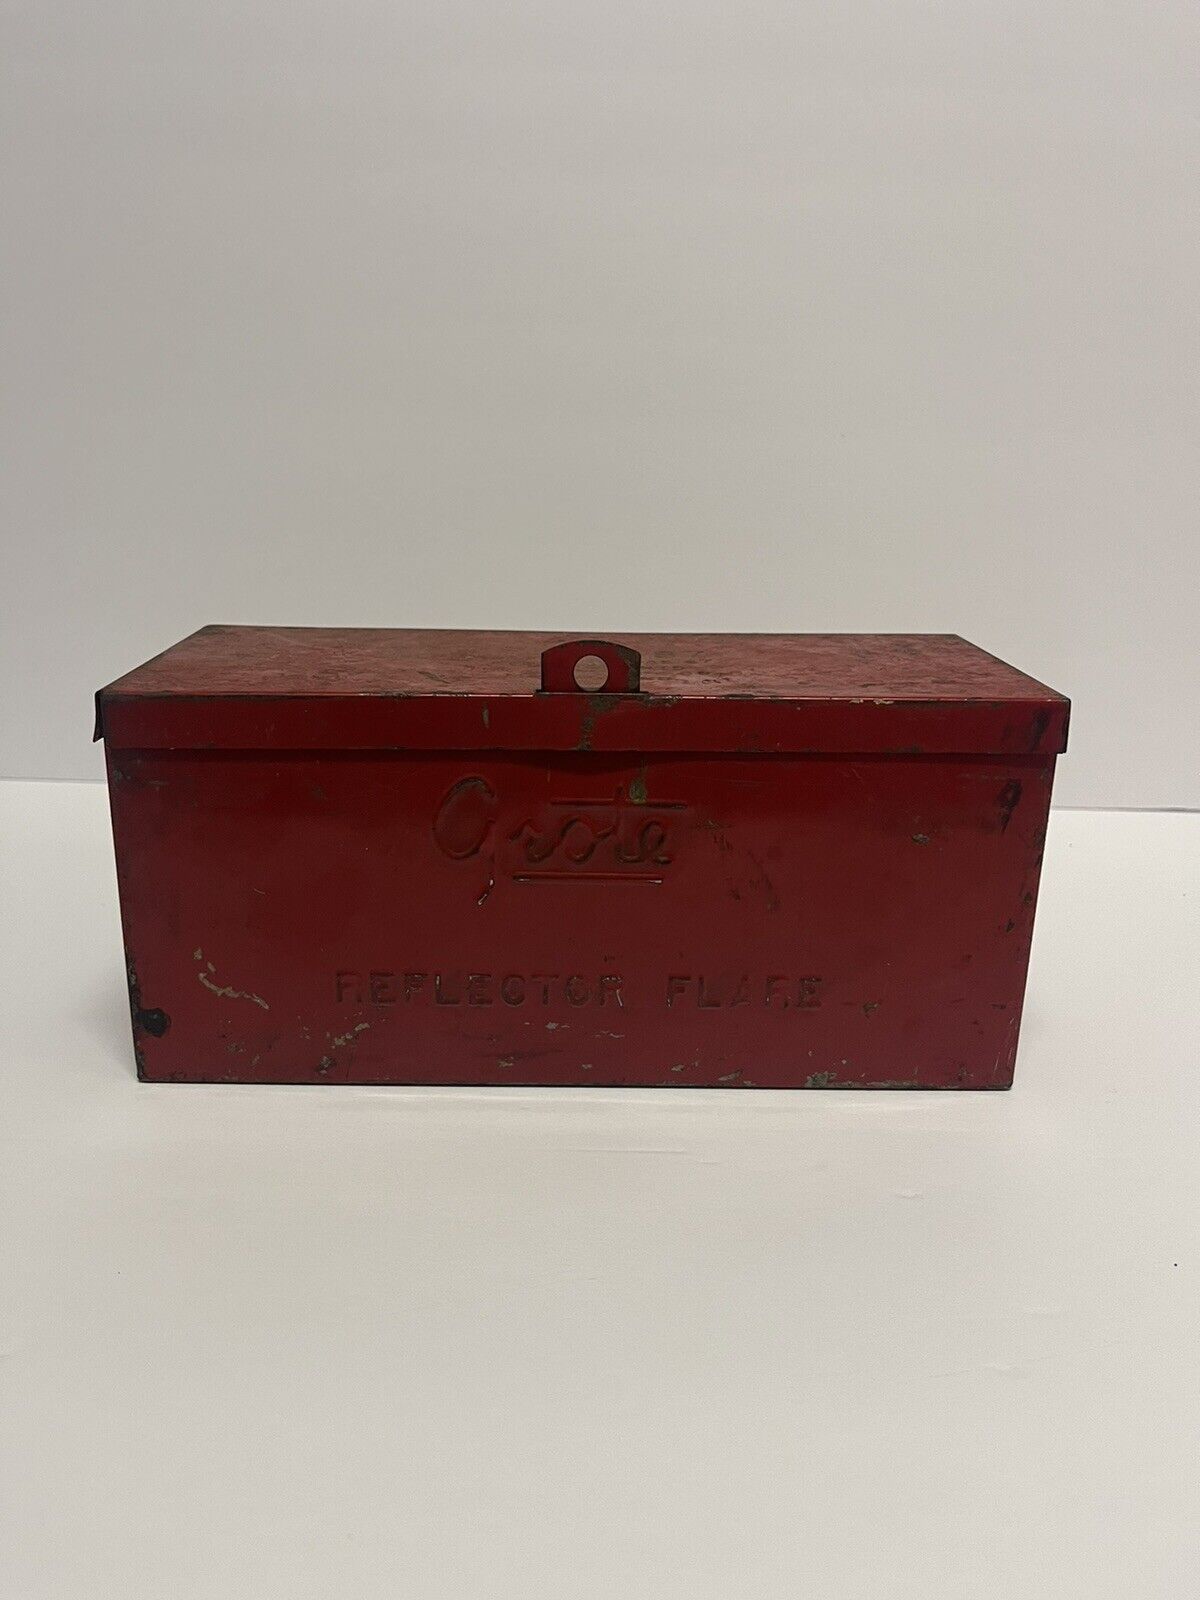 Vtg Grote #87 Reflector Flare kit in red metal box.